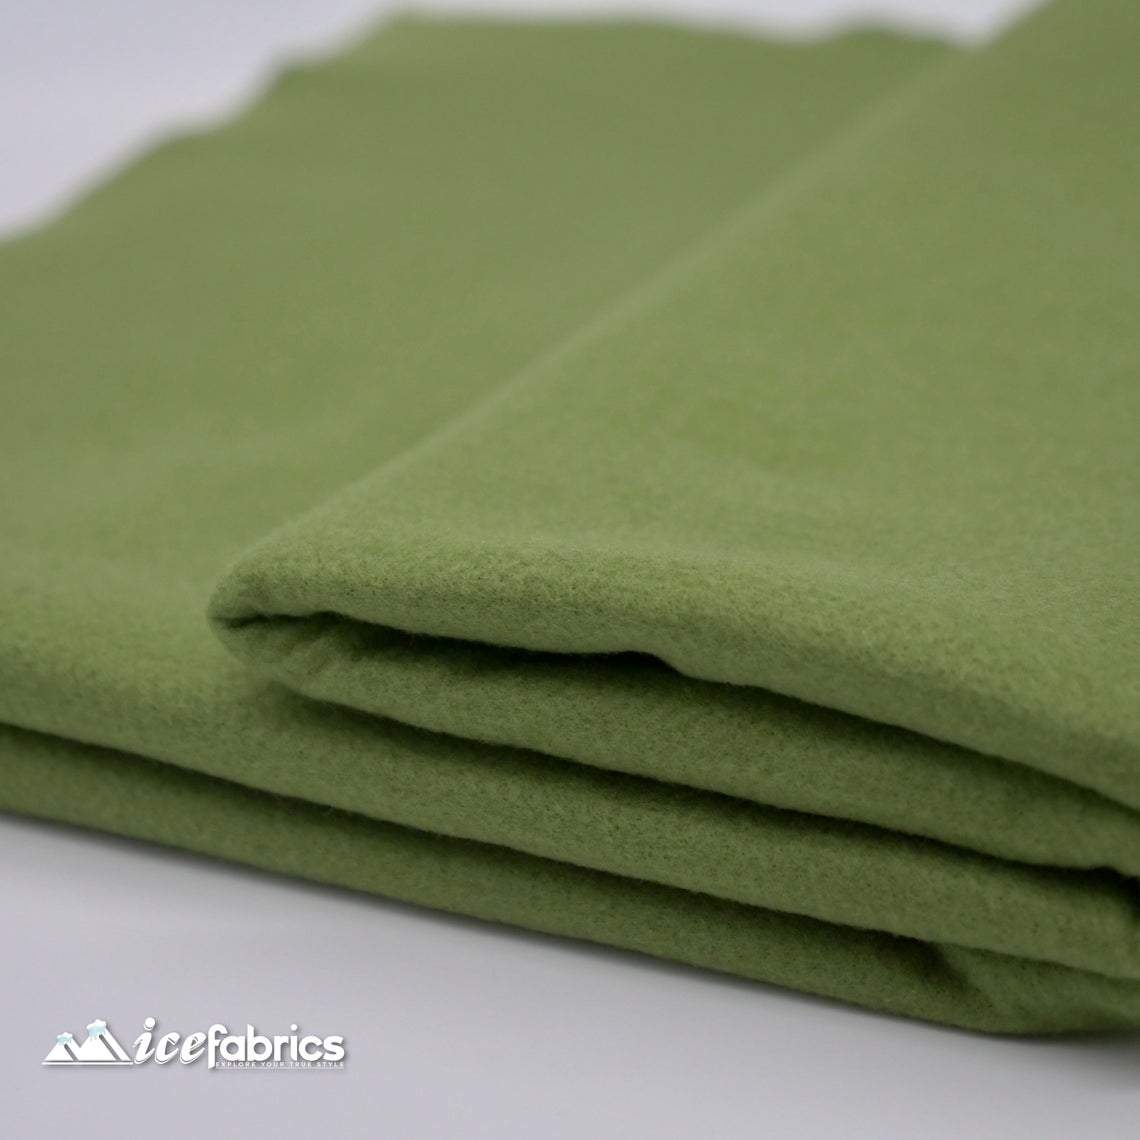 Acrylic Felt Fabric By The Roll | 20 yards | Wholesale Fabric ICE FABRICS Olive Green